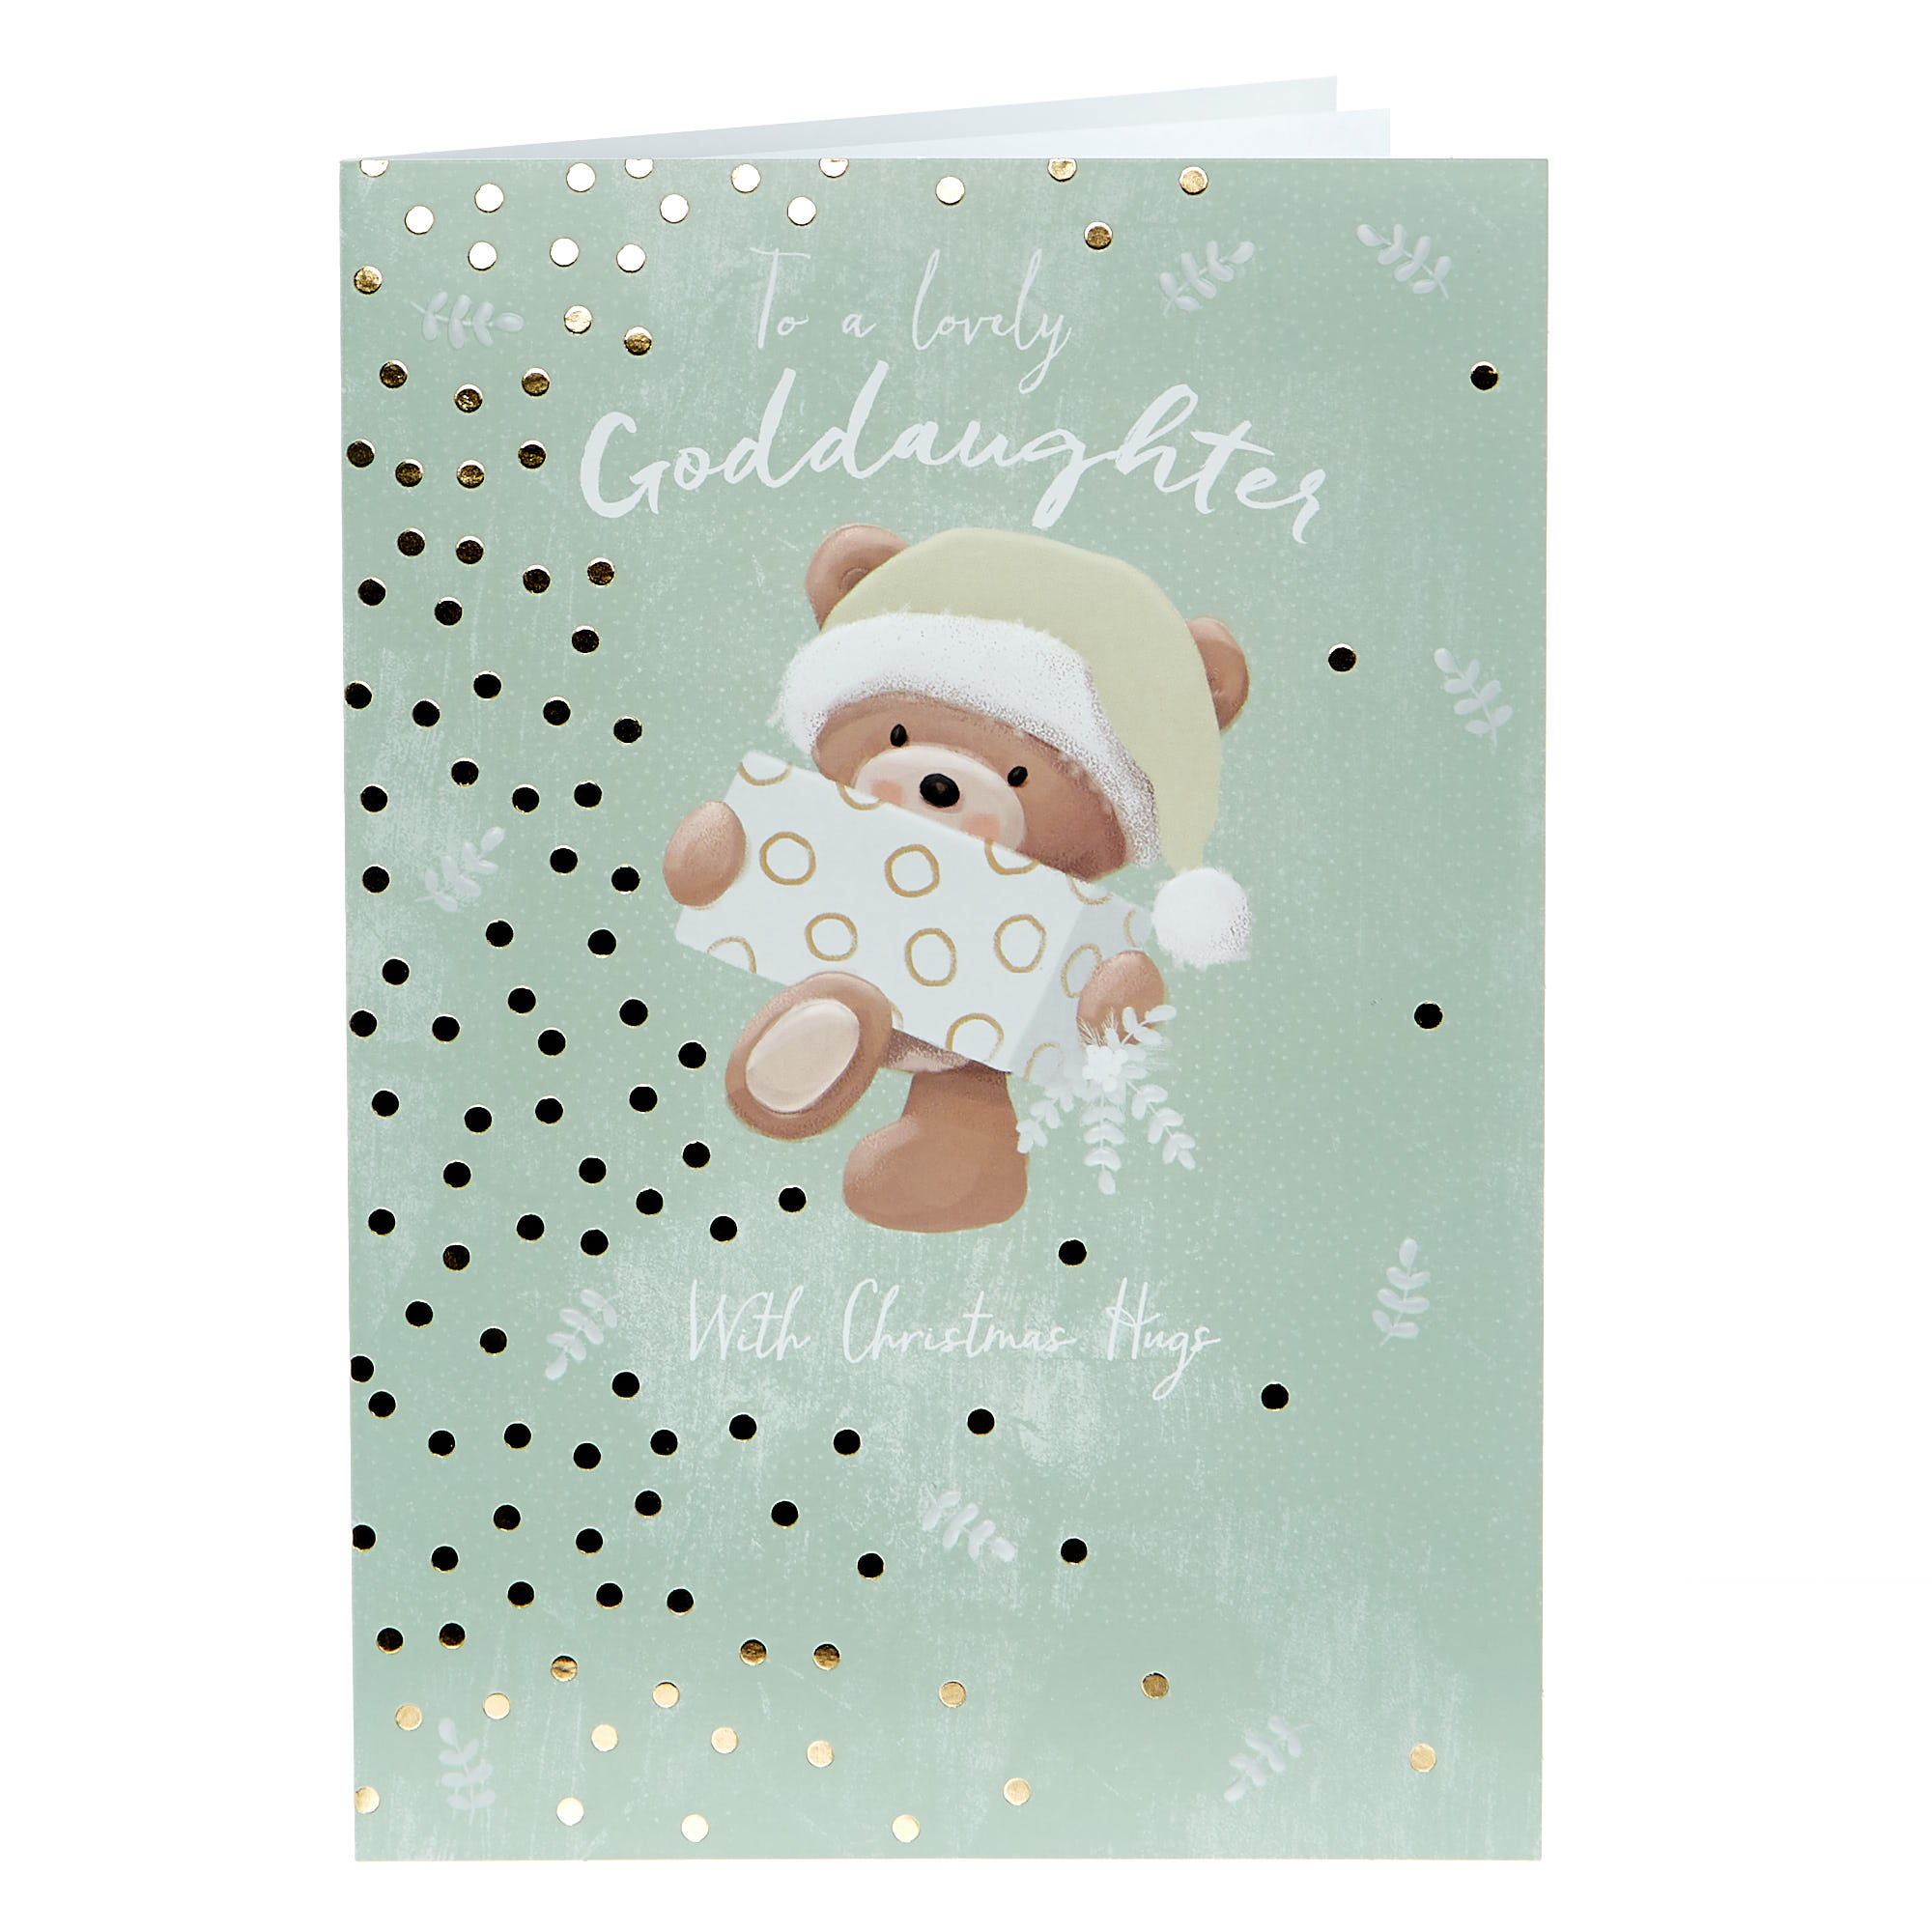 Buy Hugs Christmas Card Lovely Goddaughter With Hugs For Gbp 0 99 Card Factory Uk